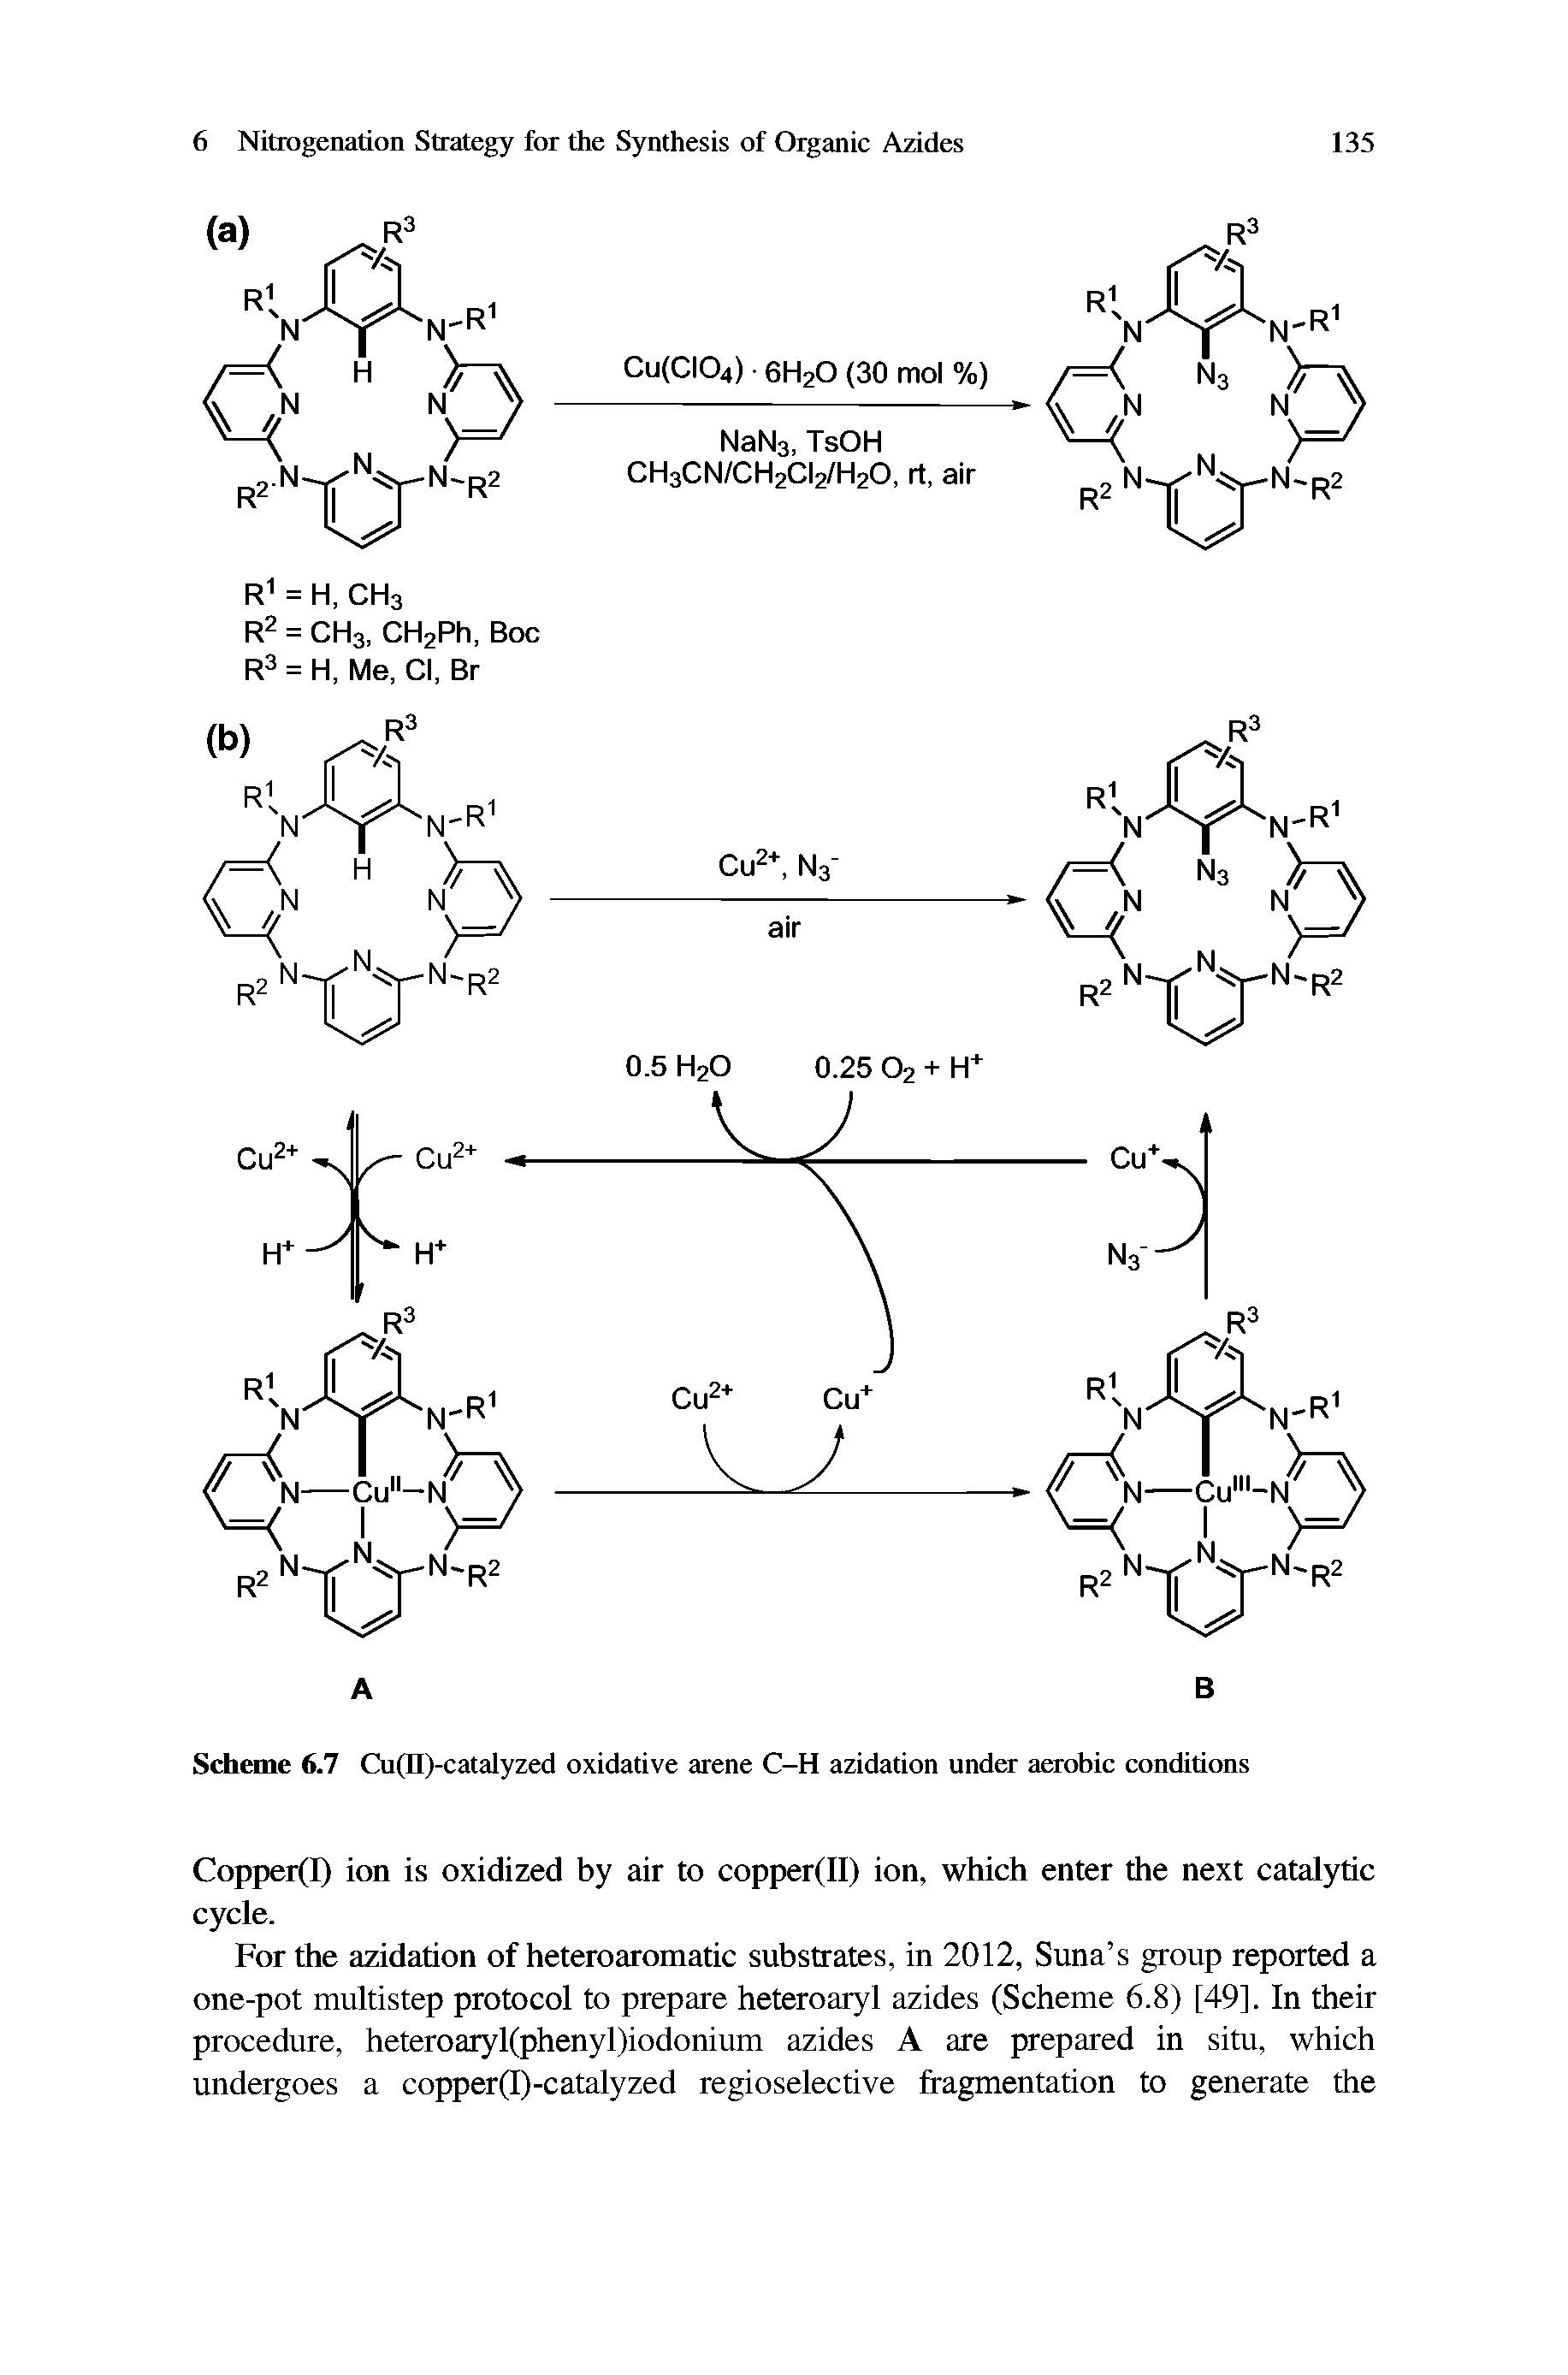 Scheme 6.7 Cu(ll)-catalyzed oxidative arene C-H azidation under aerobic conditions...